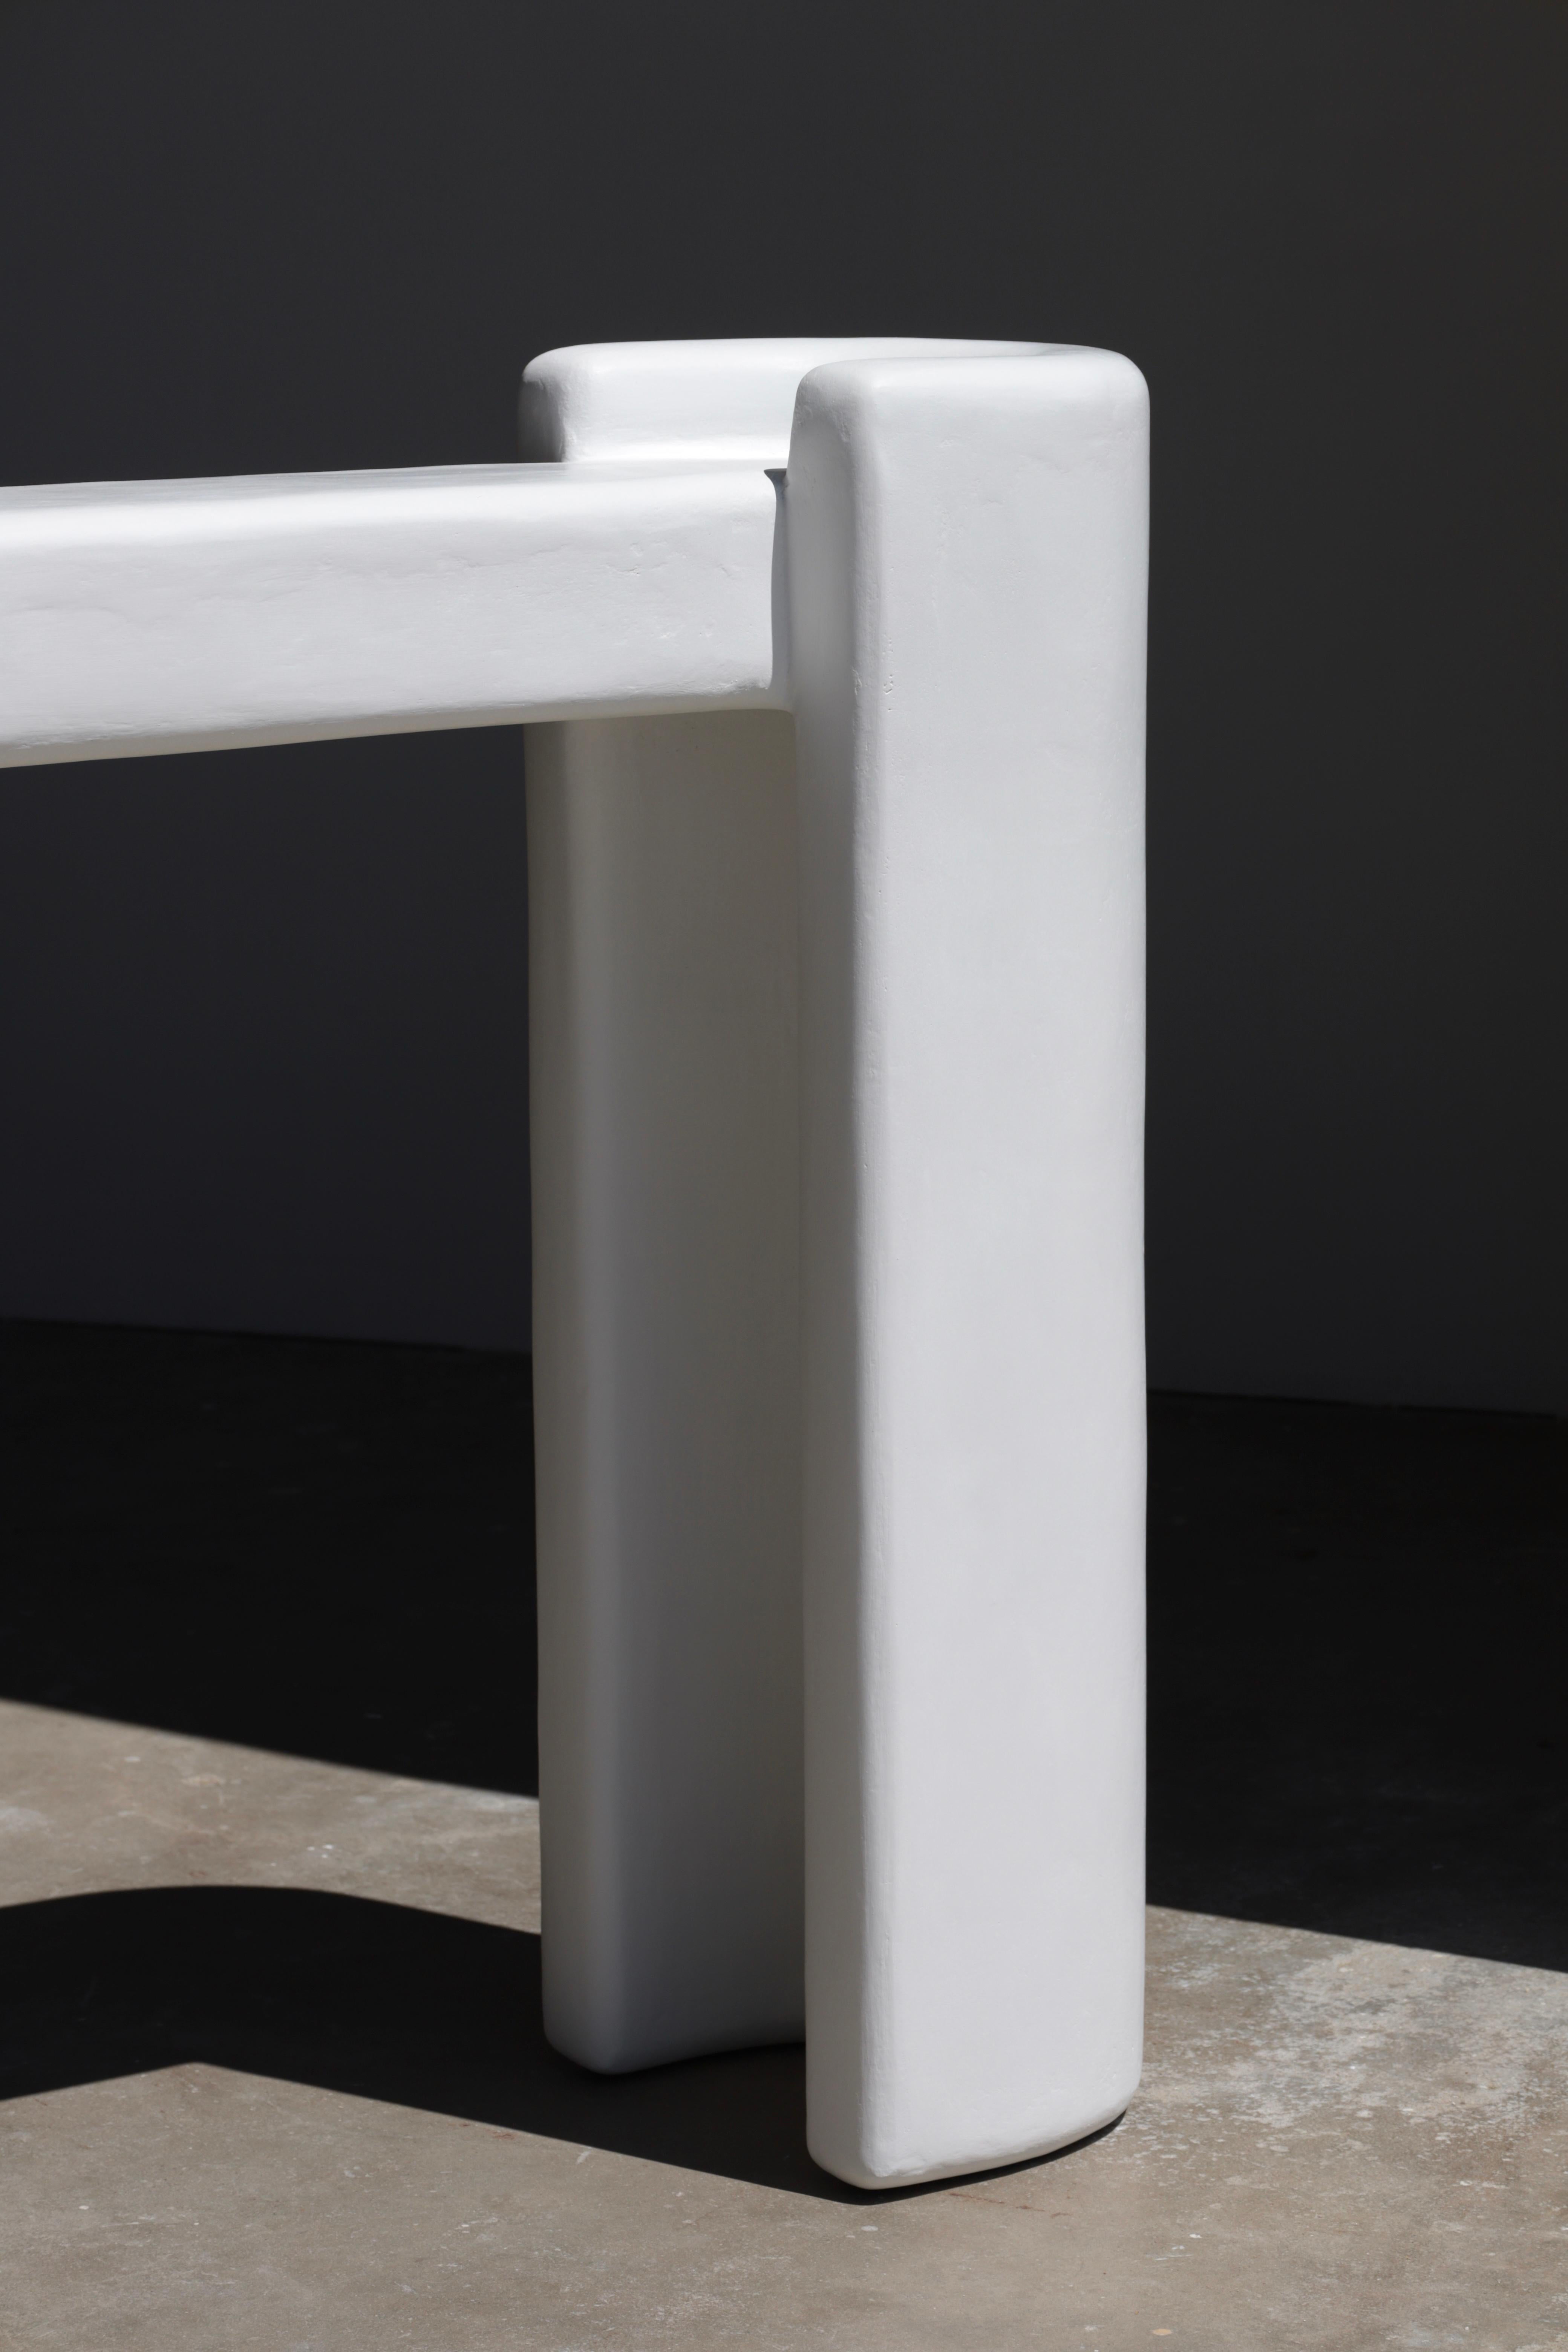 American sara sculptural plaster console in salt by öken house studios For Sale